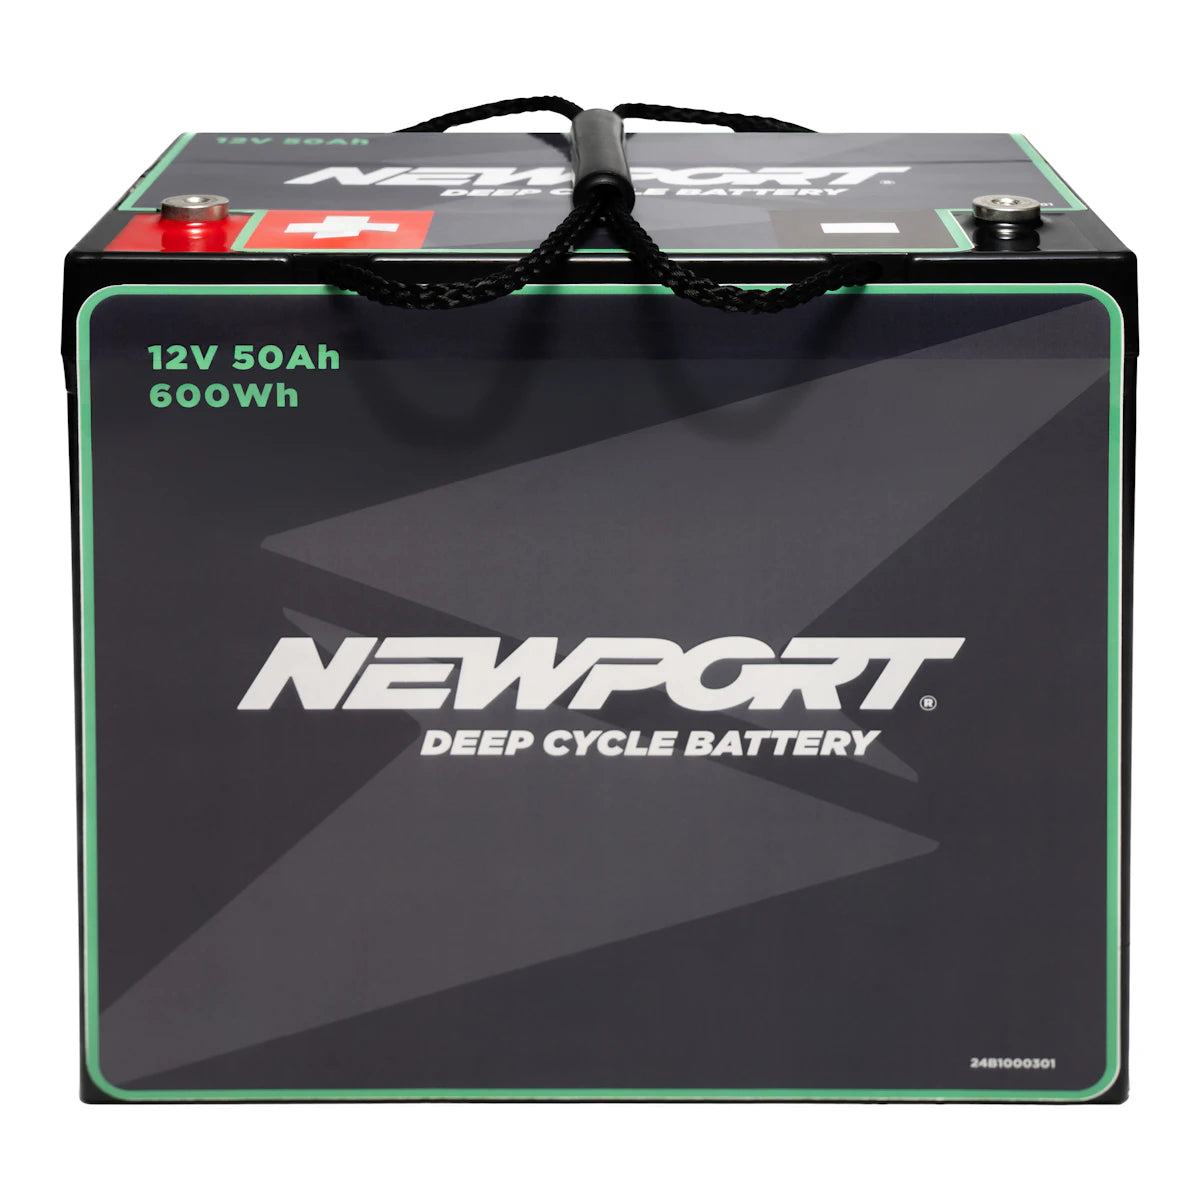 12V 50Ah Deep Cycle Marine Battery for Newport Trolling Motors